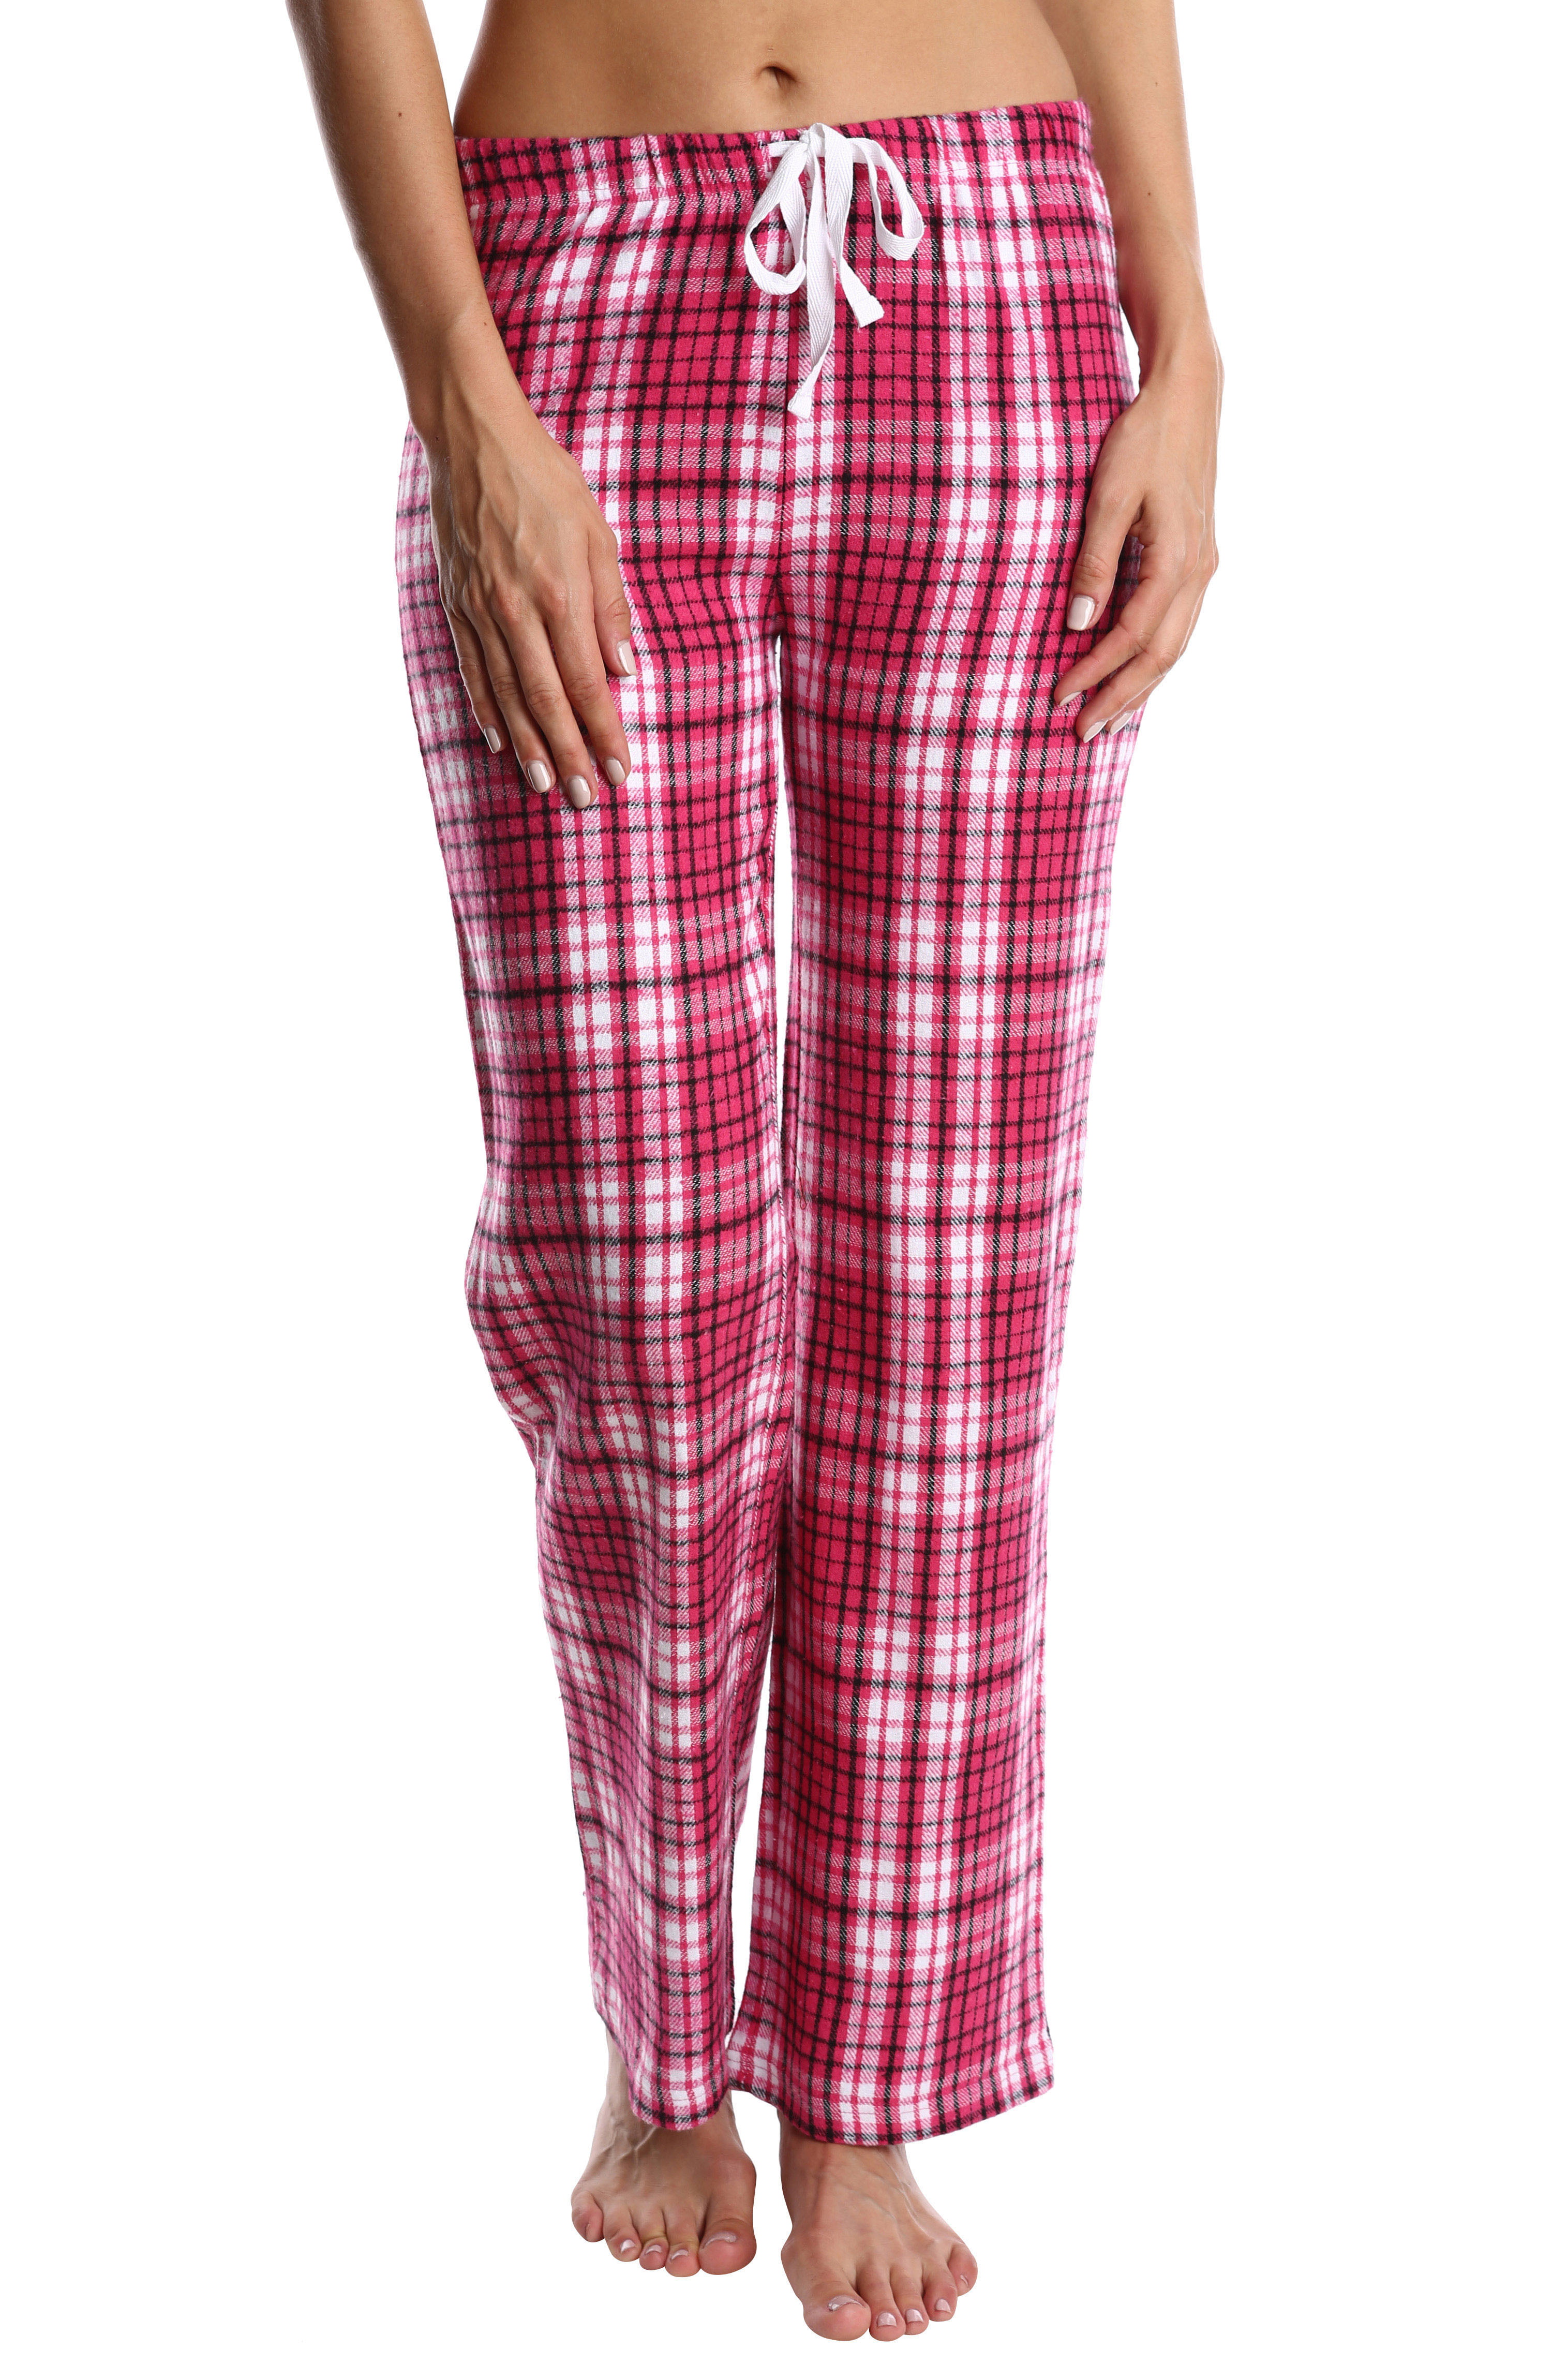 Blis Women's Cotton Flannel Pajama Pants - Ladies Lounge & Sleepwear PJ ...